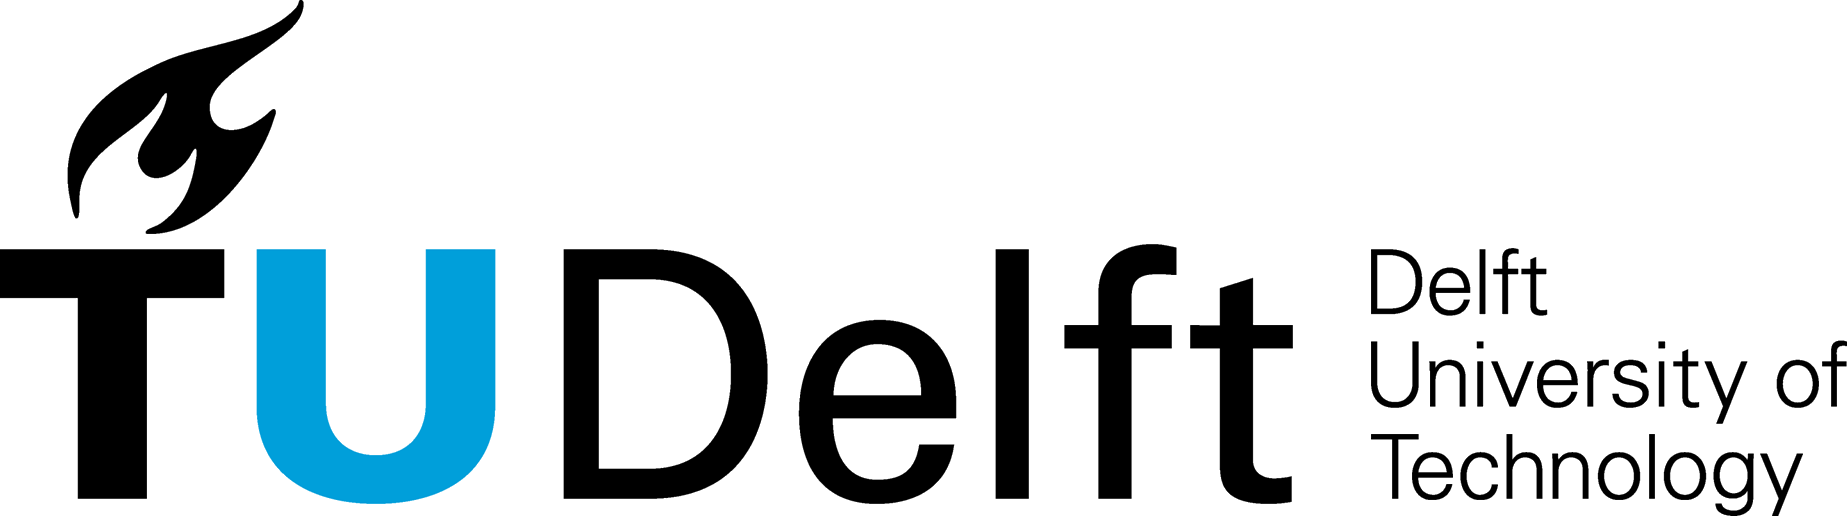 TU_Delft-logo